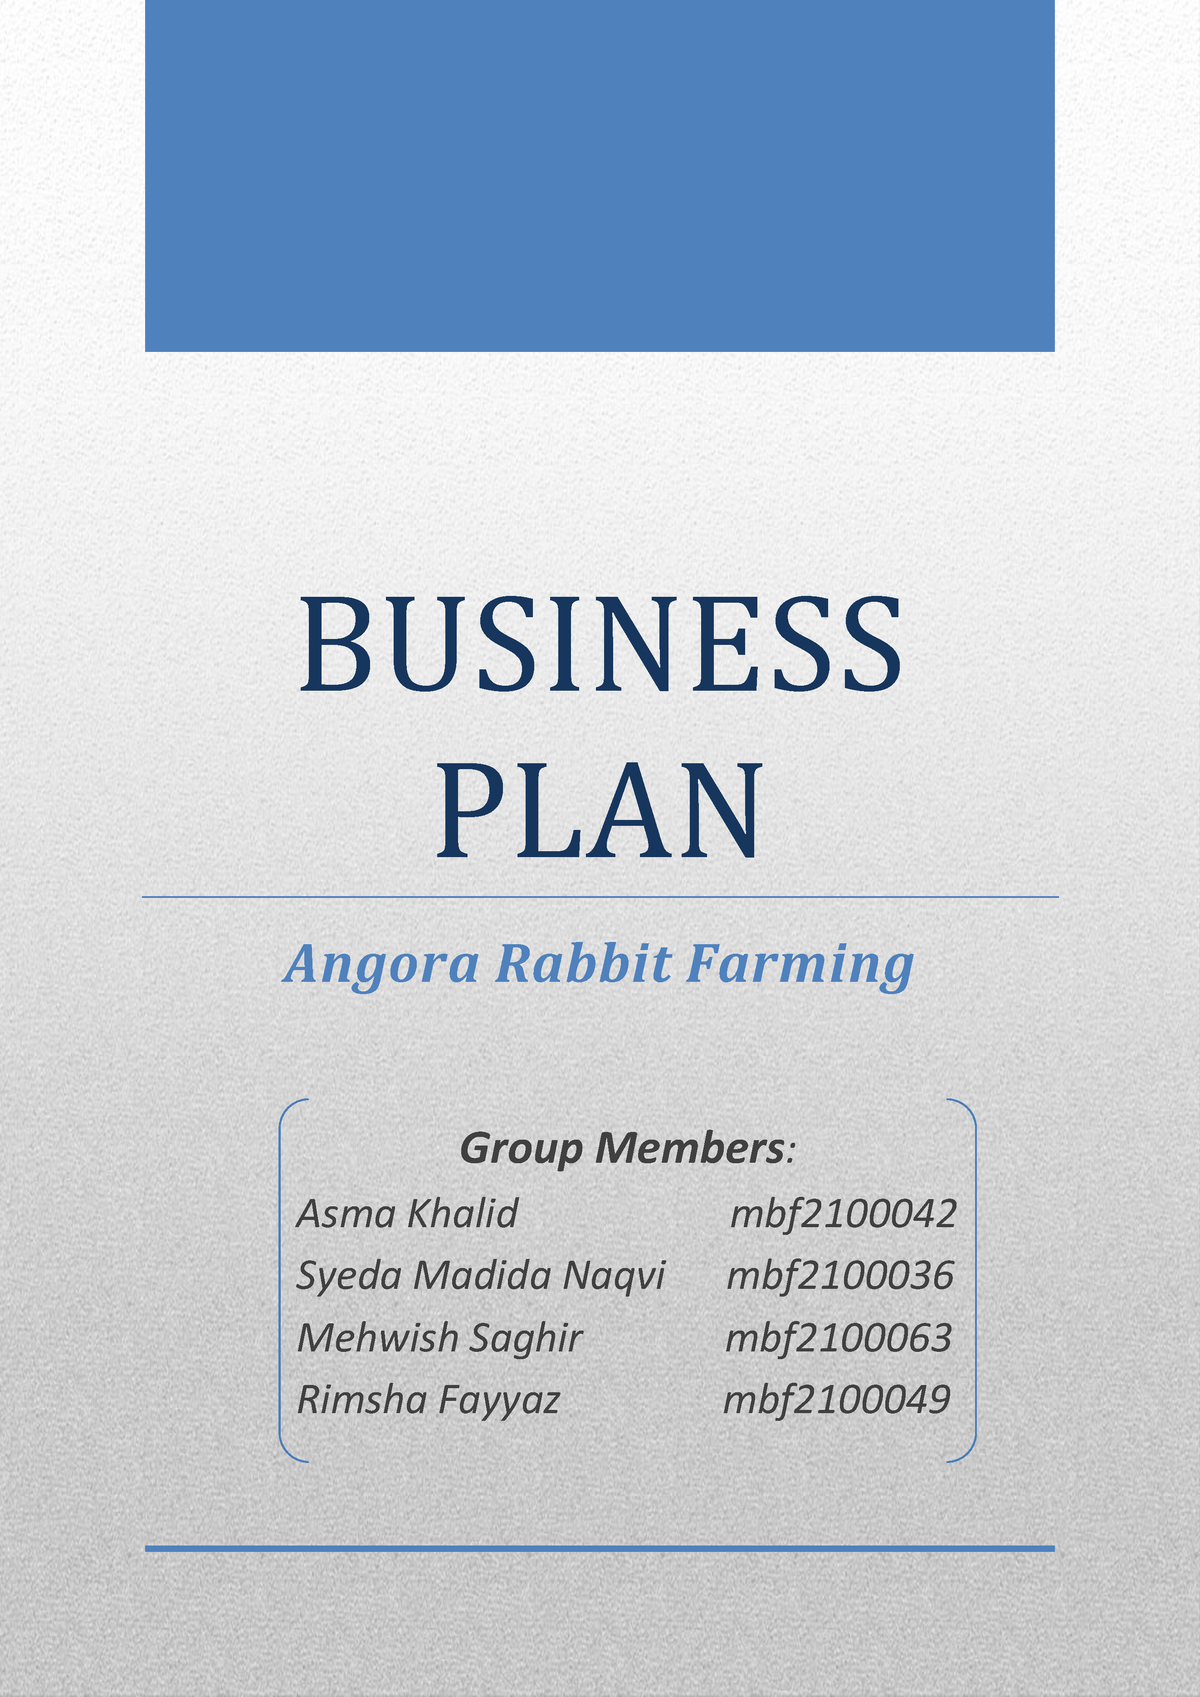 angora rabbit farming business plan